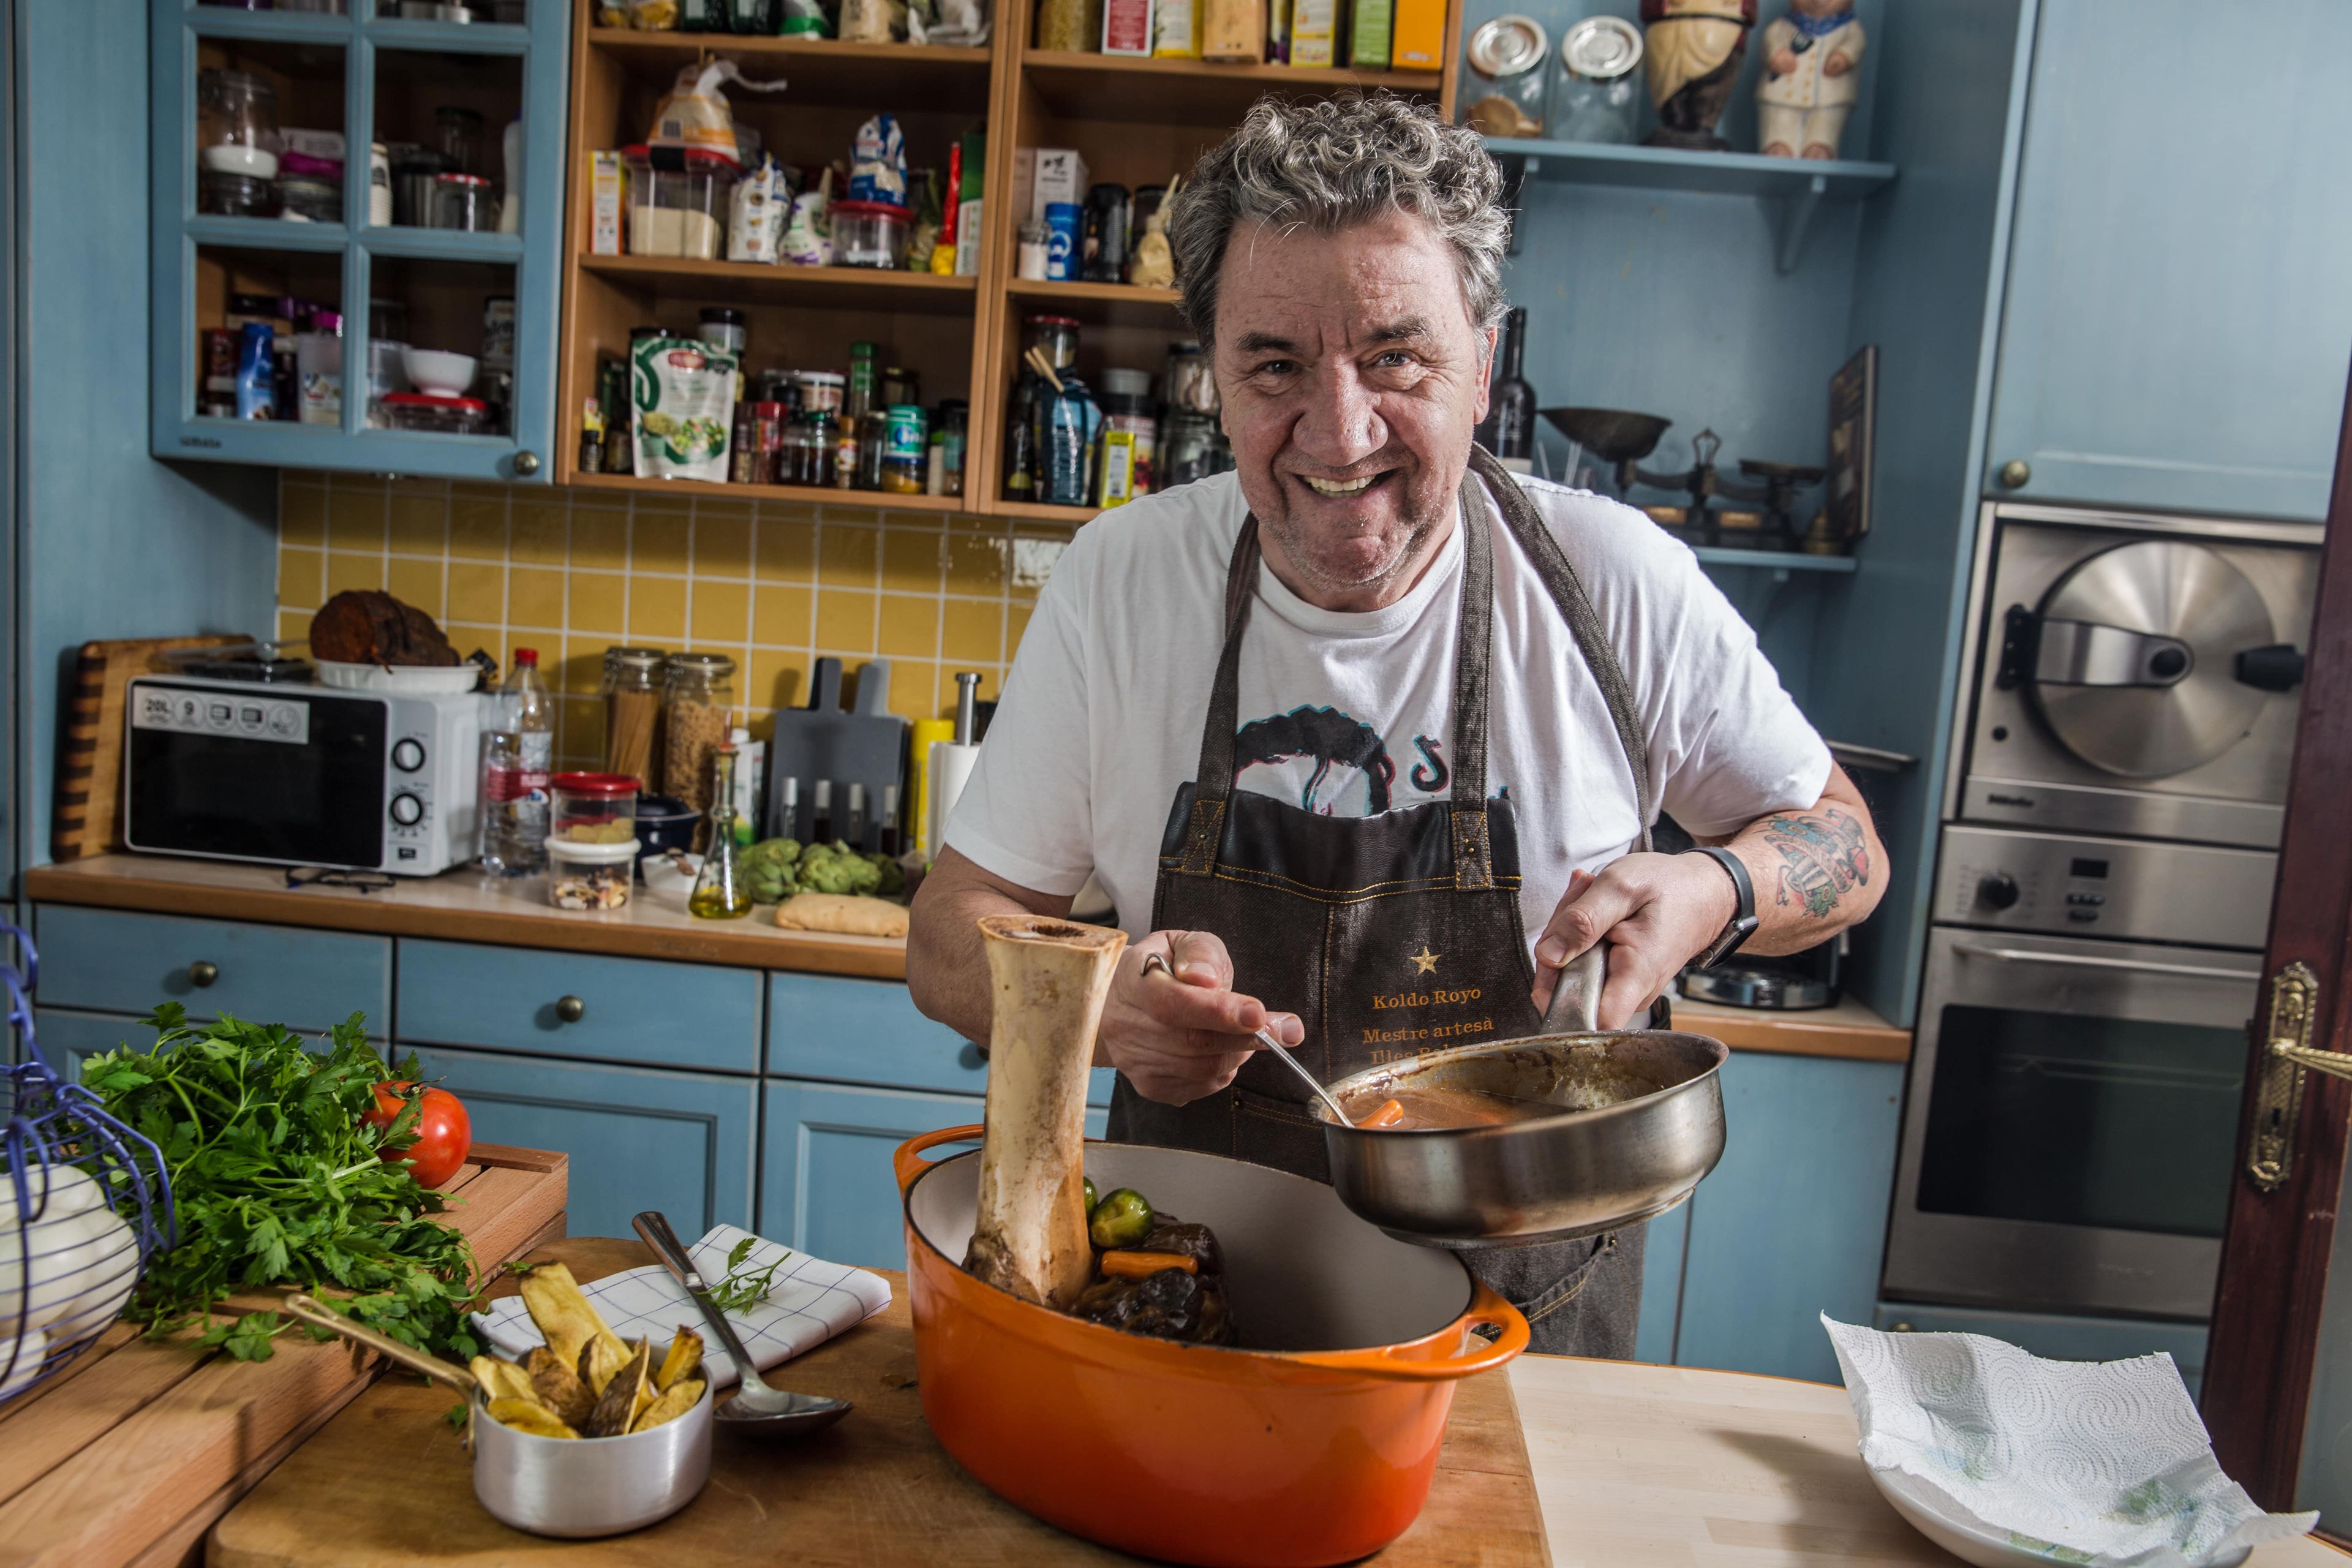 Koldo Royo chef estrella Michelin